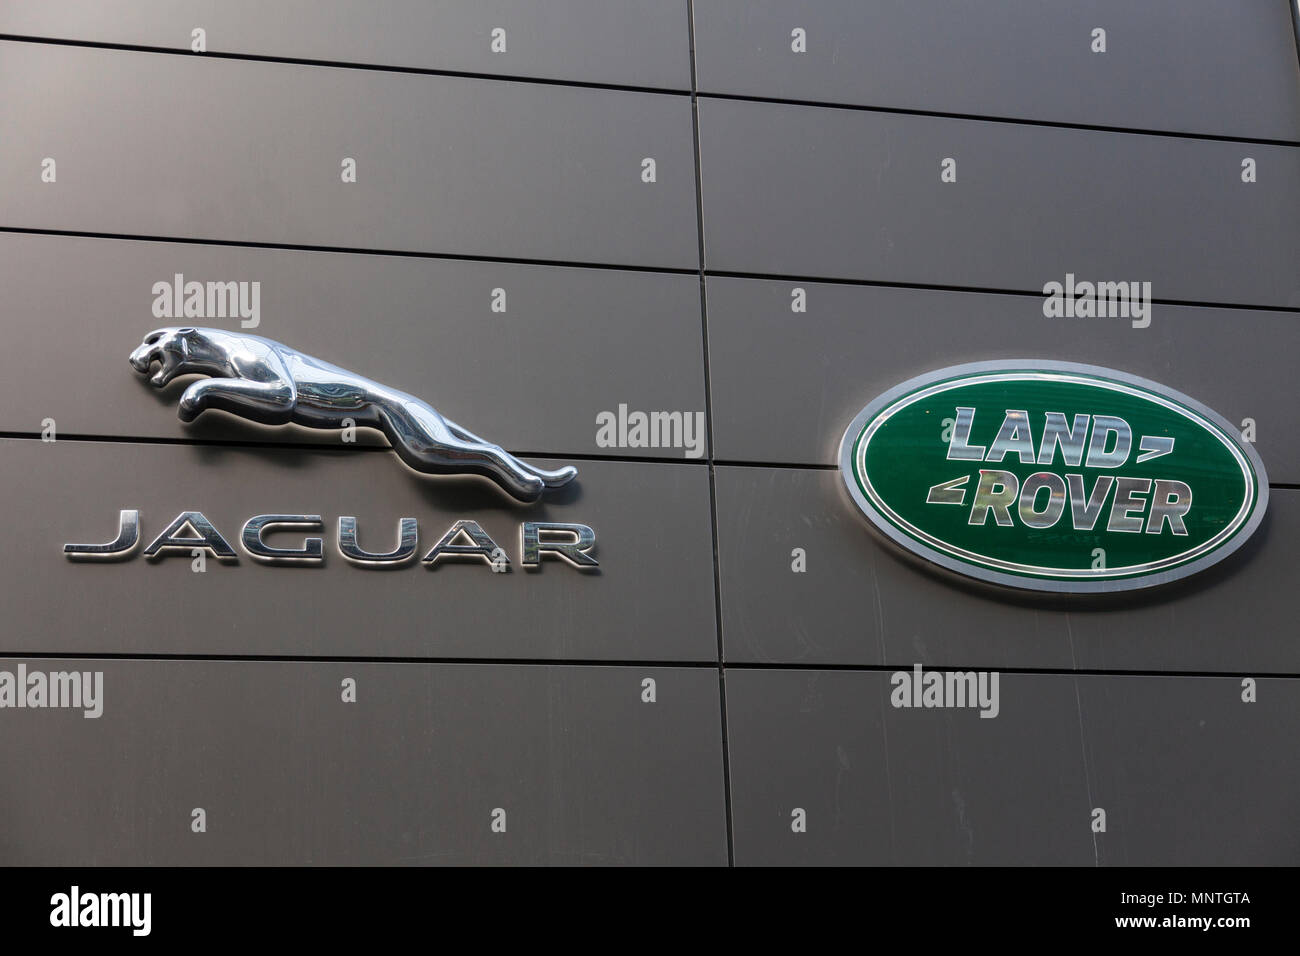 Jaguar Land Rover showroom at Westfield, Stratford in London Stock Photo